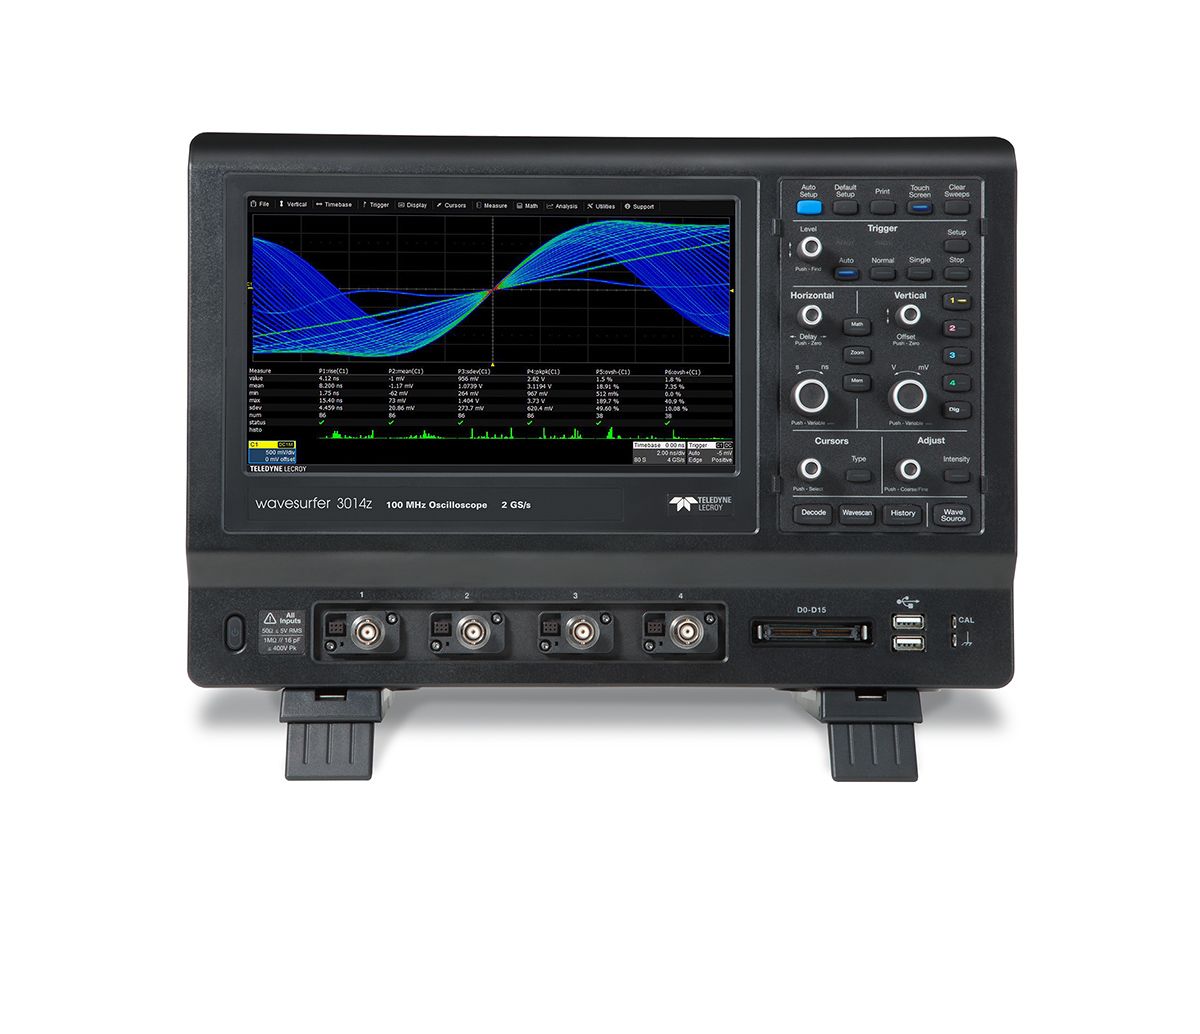 Oscilloscopio Da banco Teledyne LeCroy WaveSurfer 3024z COMPLETAMENTE CARICATO, 4 ch. analogici, 200MHz